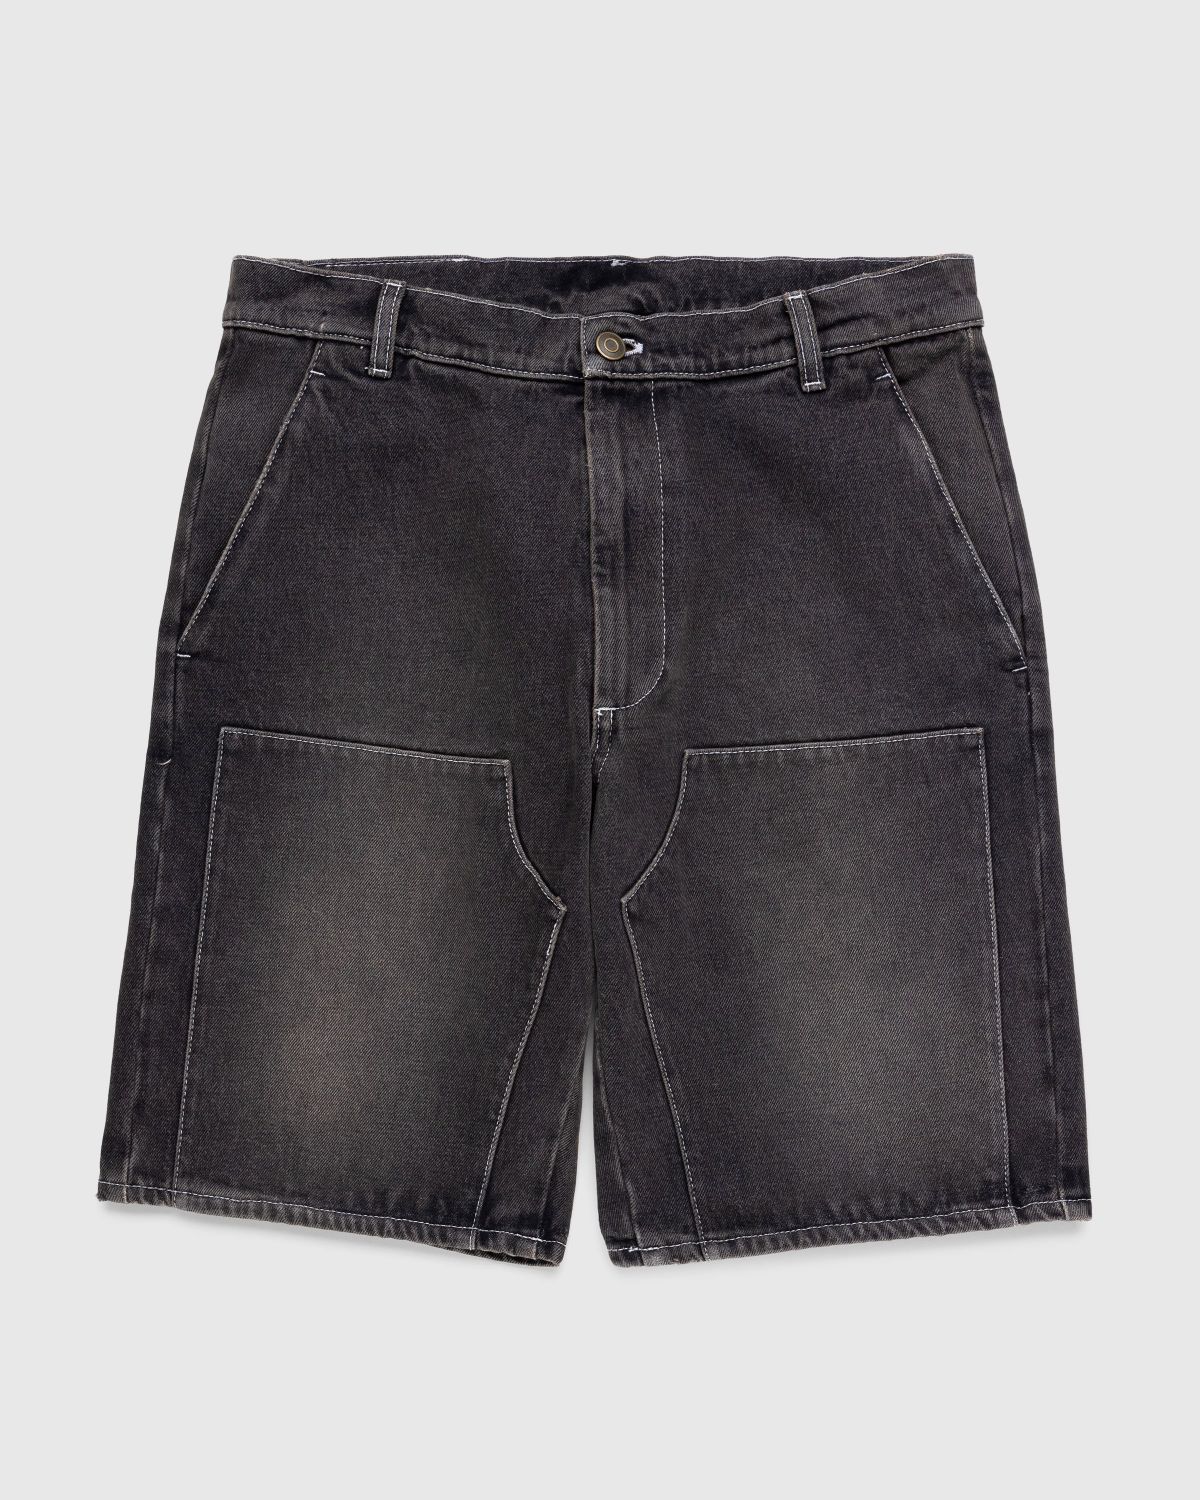 Winnie New York – Denim Shorts Black - Shorts - Black - Image 1